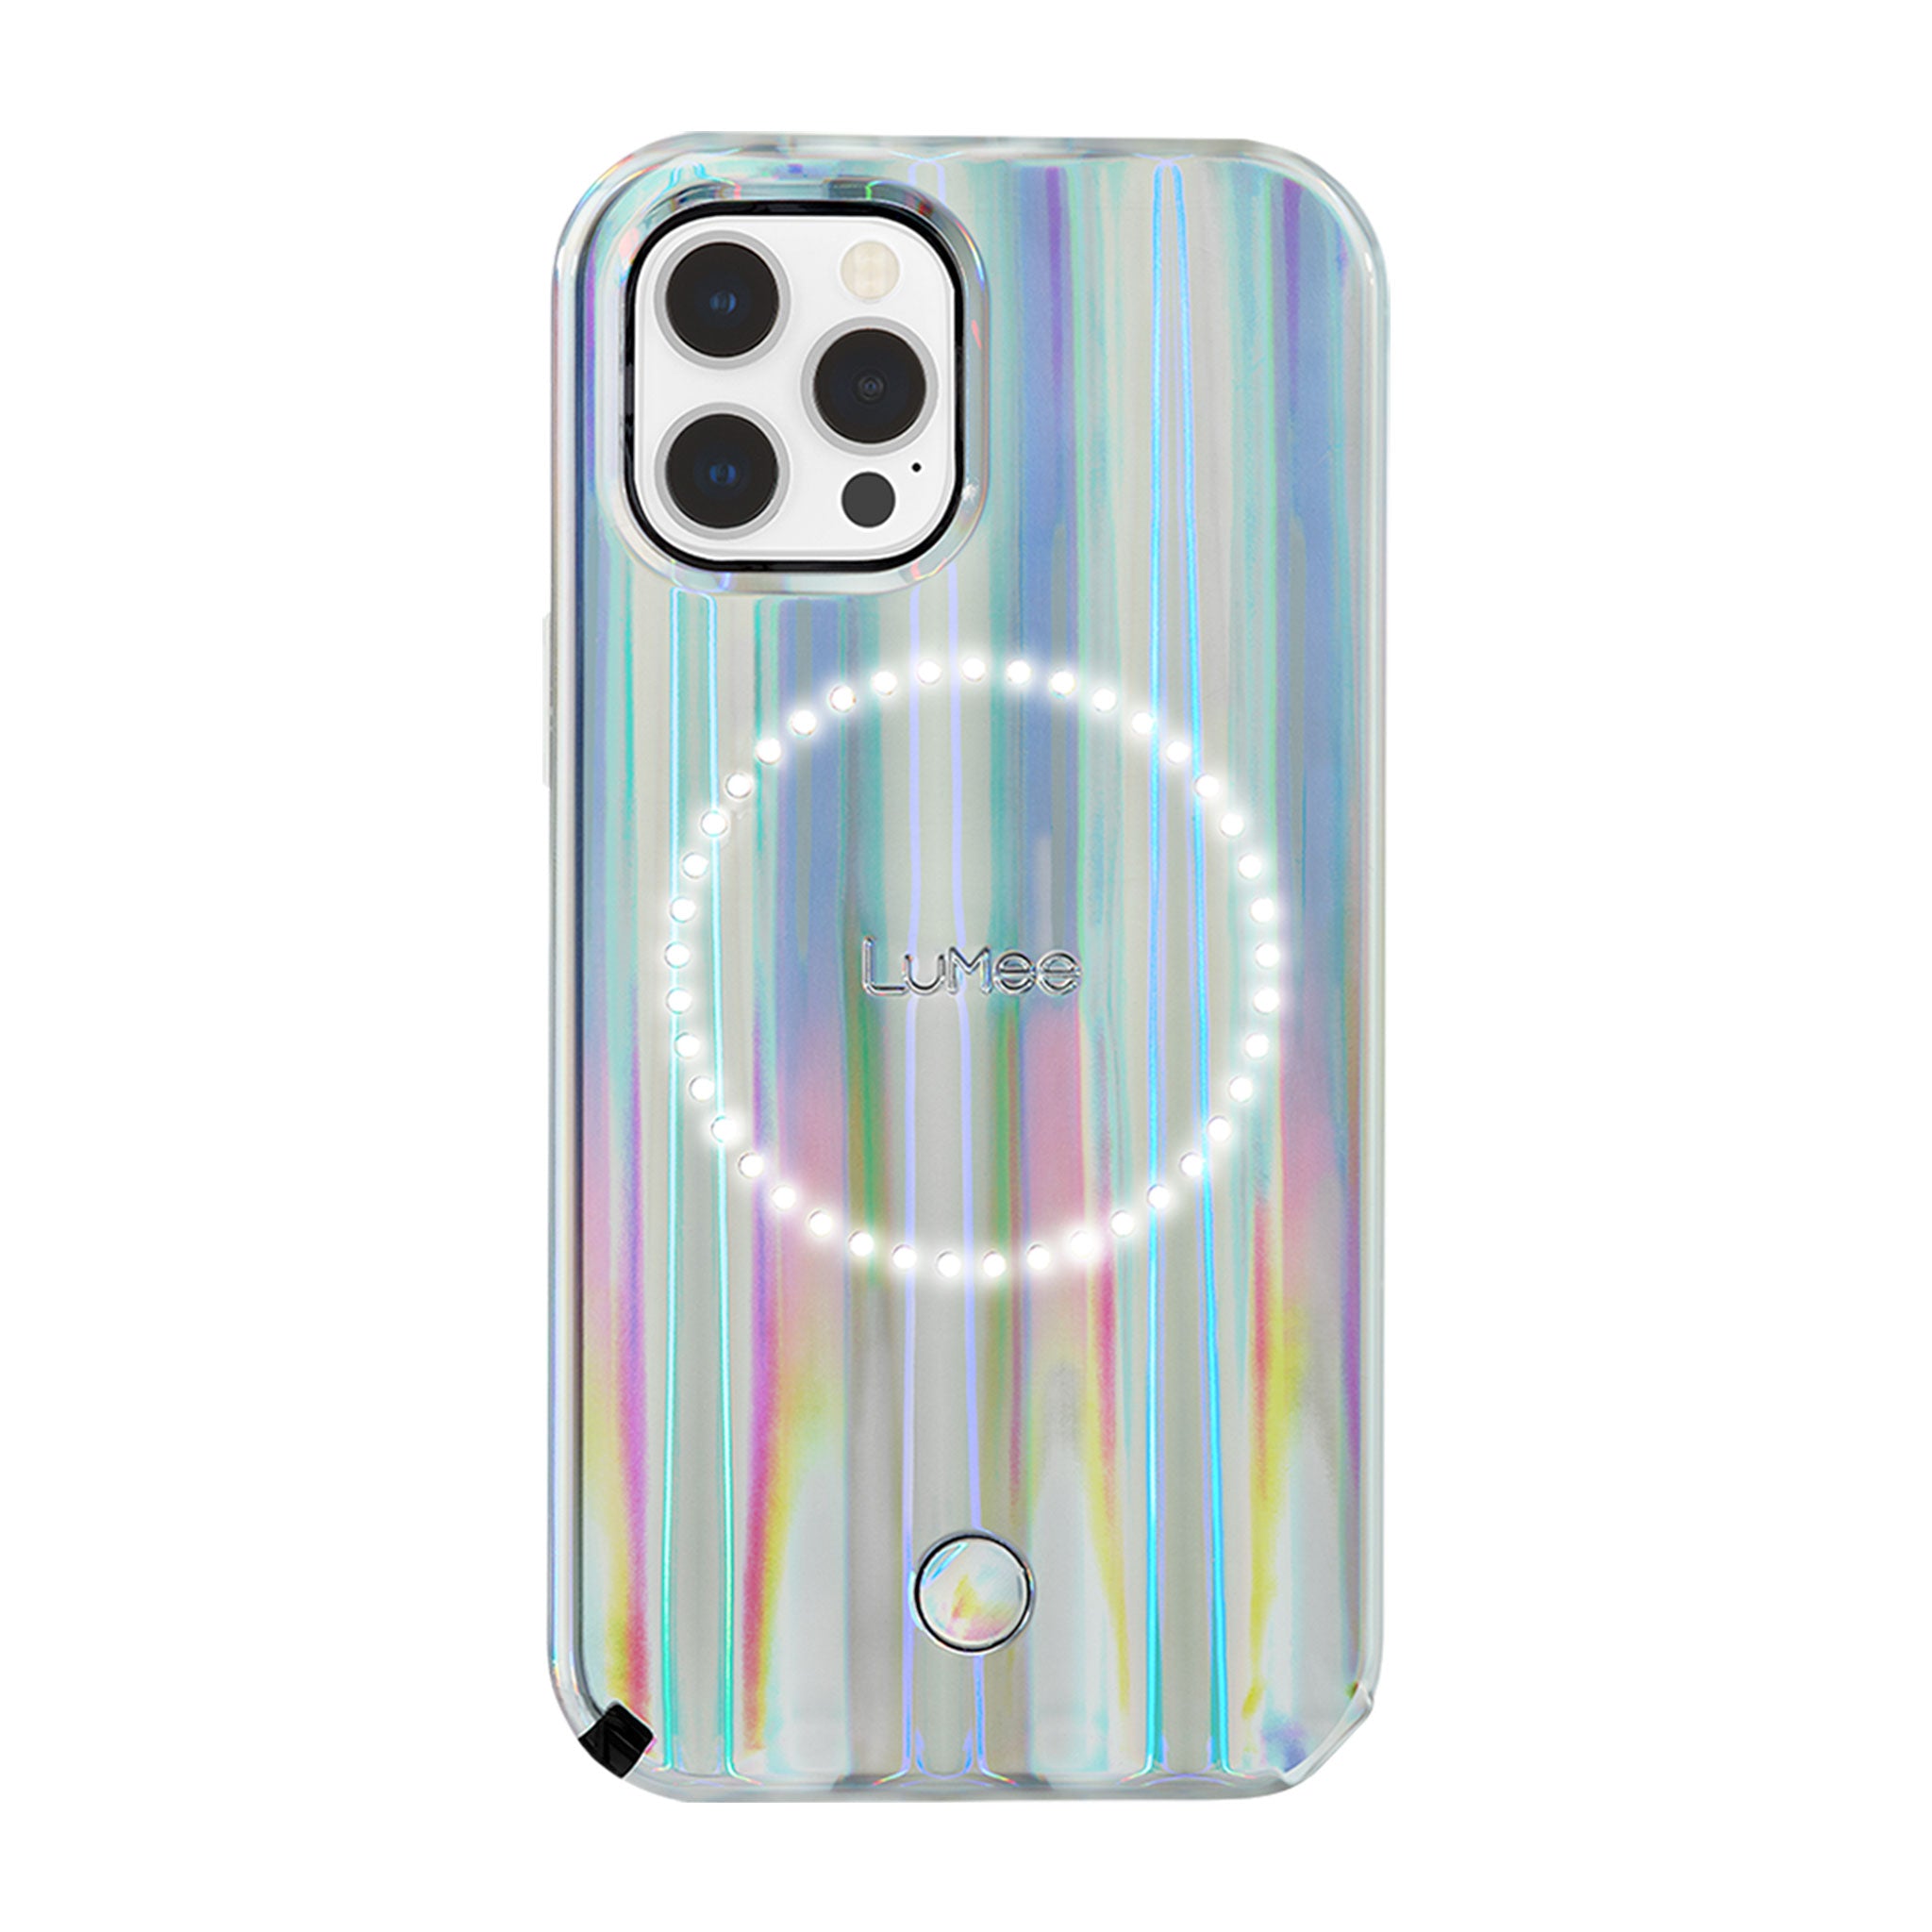 Lumee - Halo Case For Apple Iphone 12 Pro Max - Paris Hilton Holographic